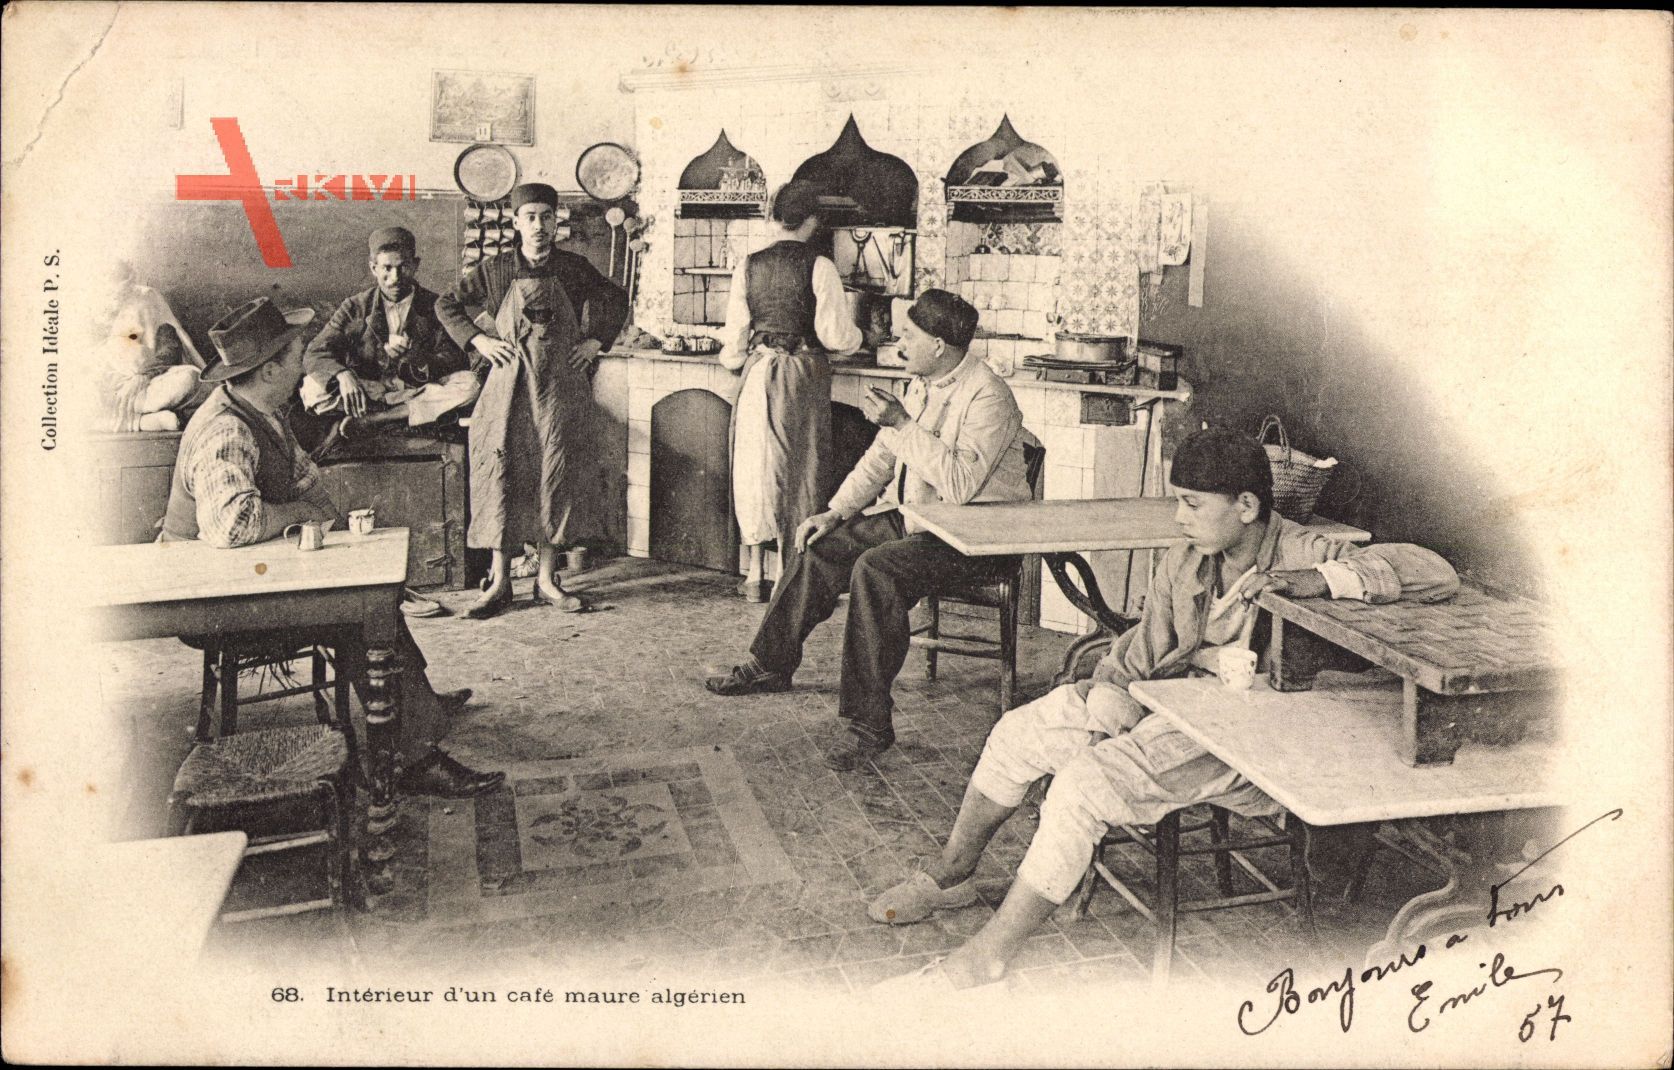 Algerien, Interieur dun cafe amure algerien, Araber, Herd, Collection Idéale